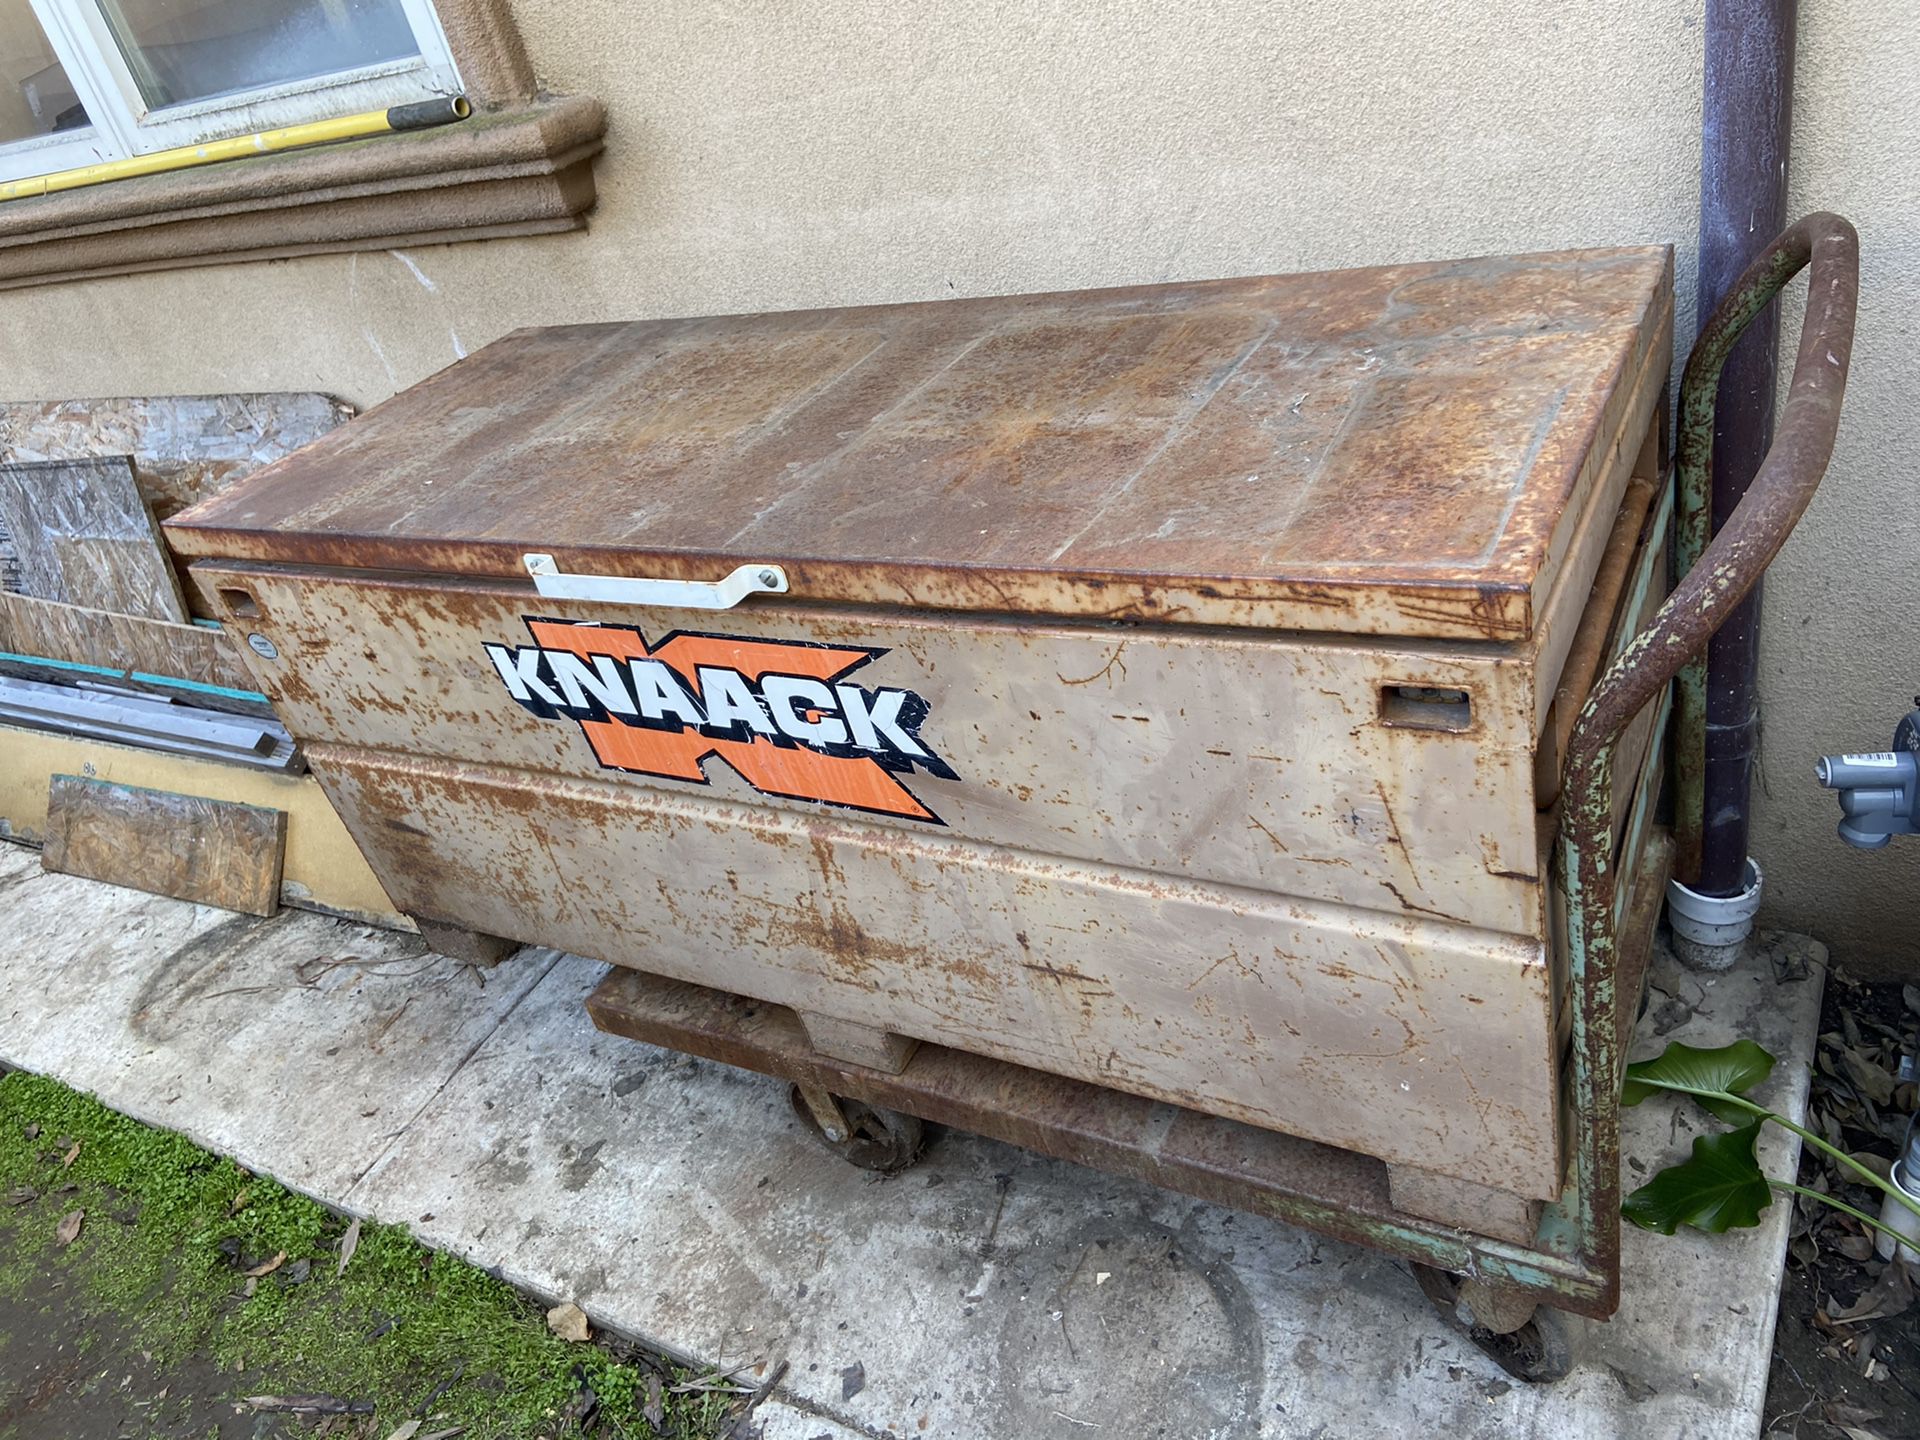 Knaack job box toolbox 60” wide, 24” deep, 27” tall, w/steel cart and tools included